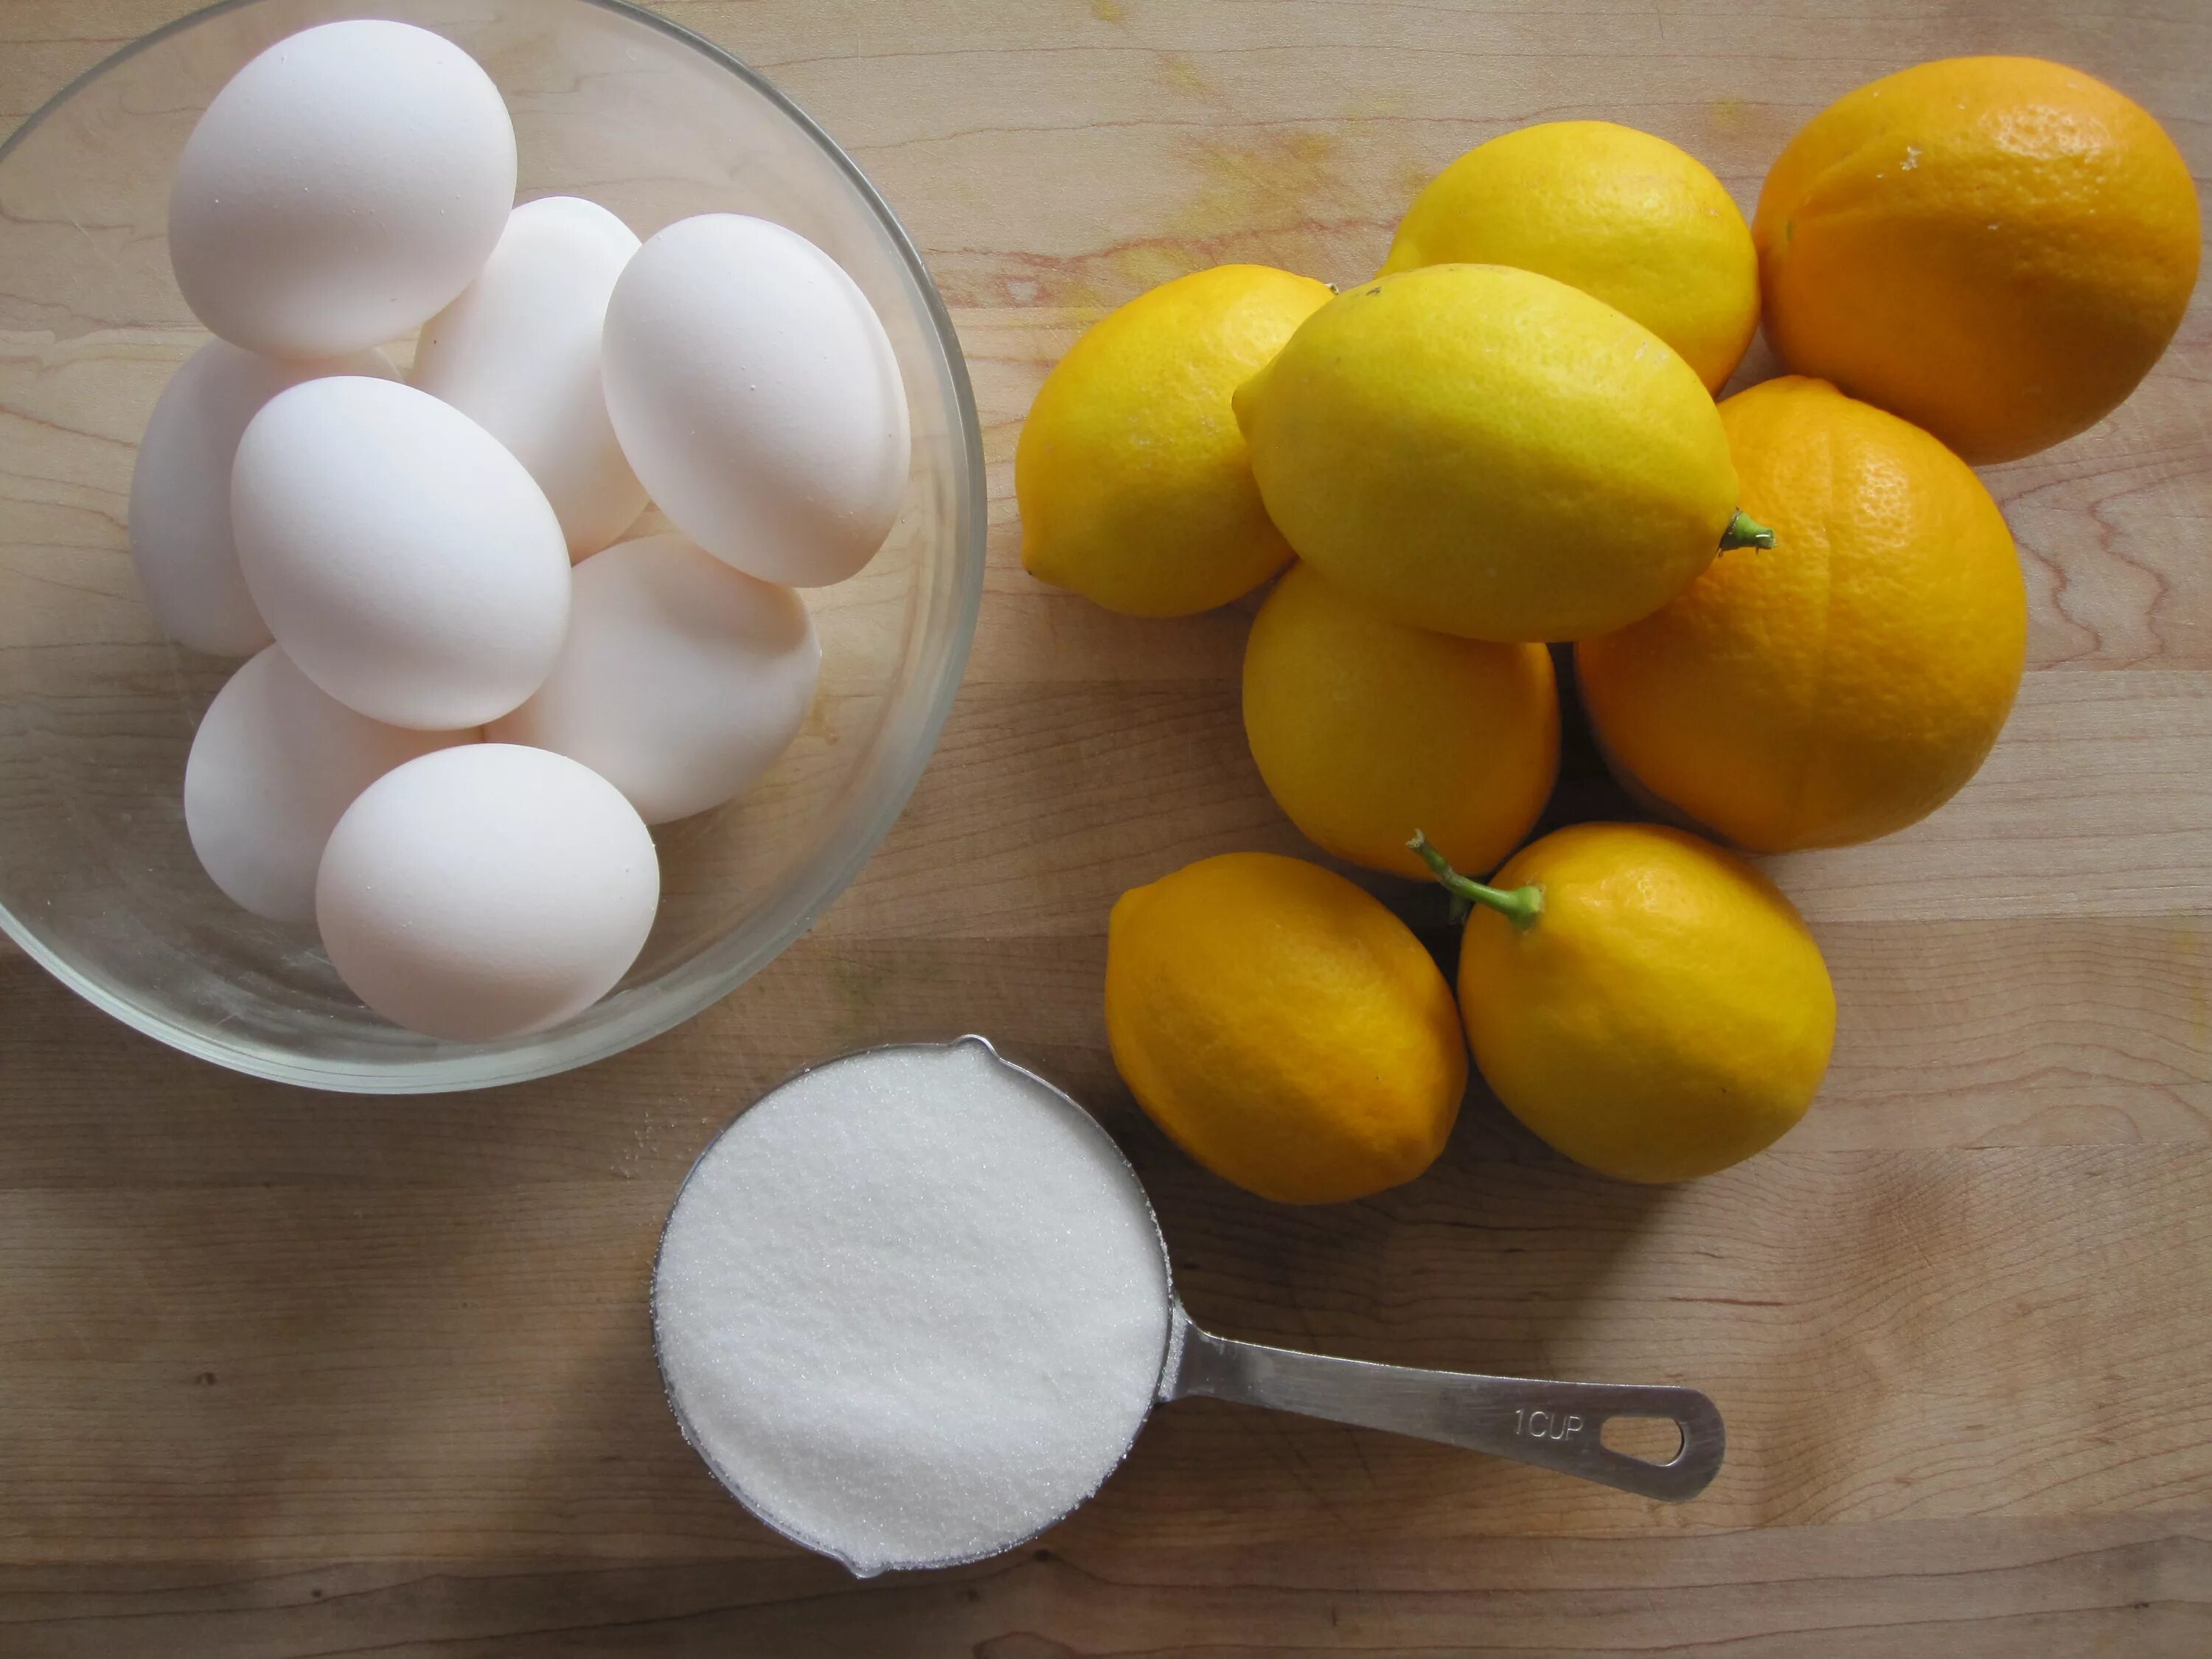 Яйцо и лимон. Яичная скорлупа с лимоном. Скорлупа яиц и лимон. Яйцо в лимонном соке.